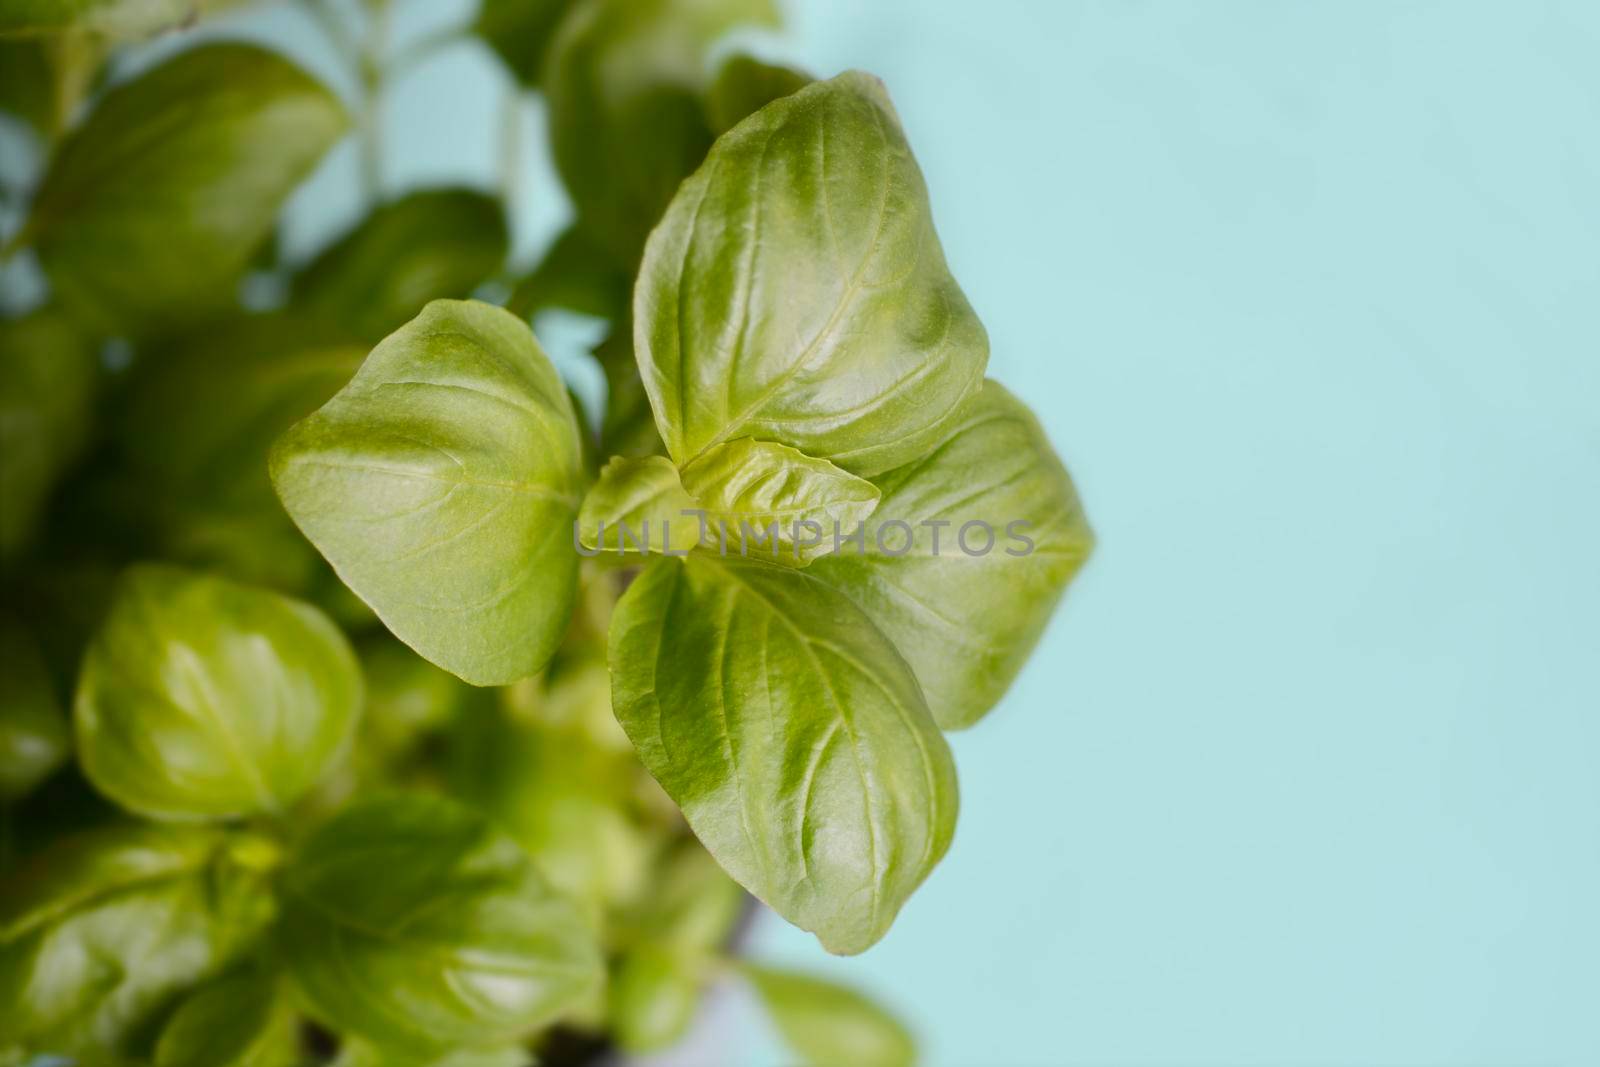 Common basil leaves - Latin name - Ocimum basilicum